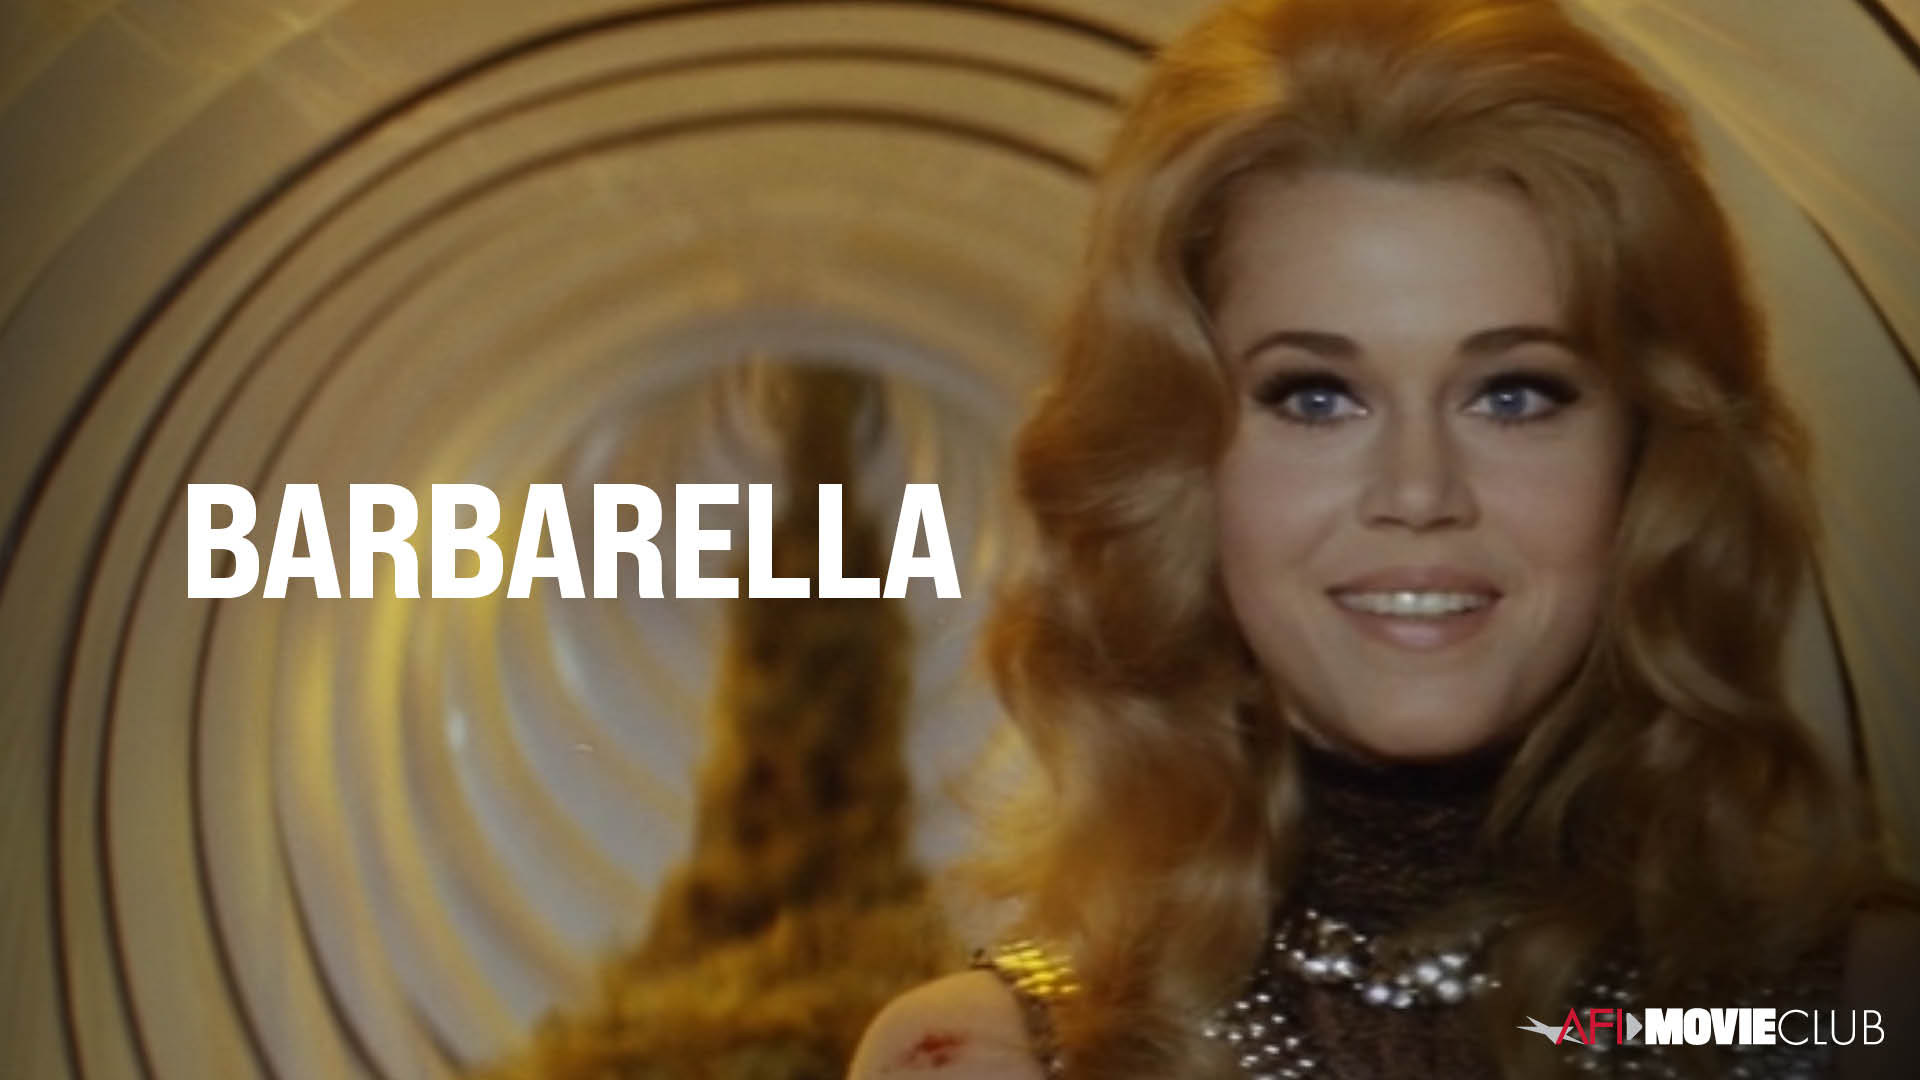 Barberella Film Still - Jane Fonda